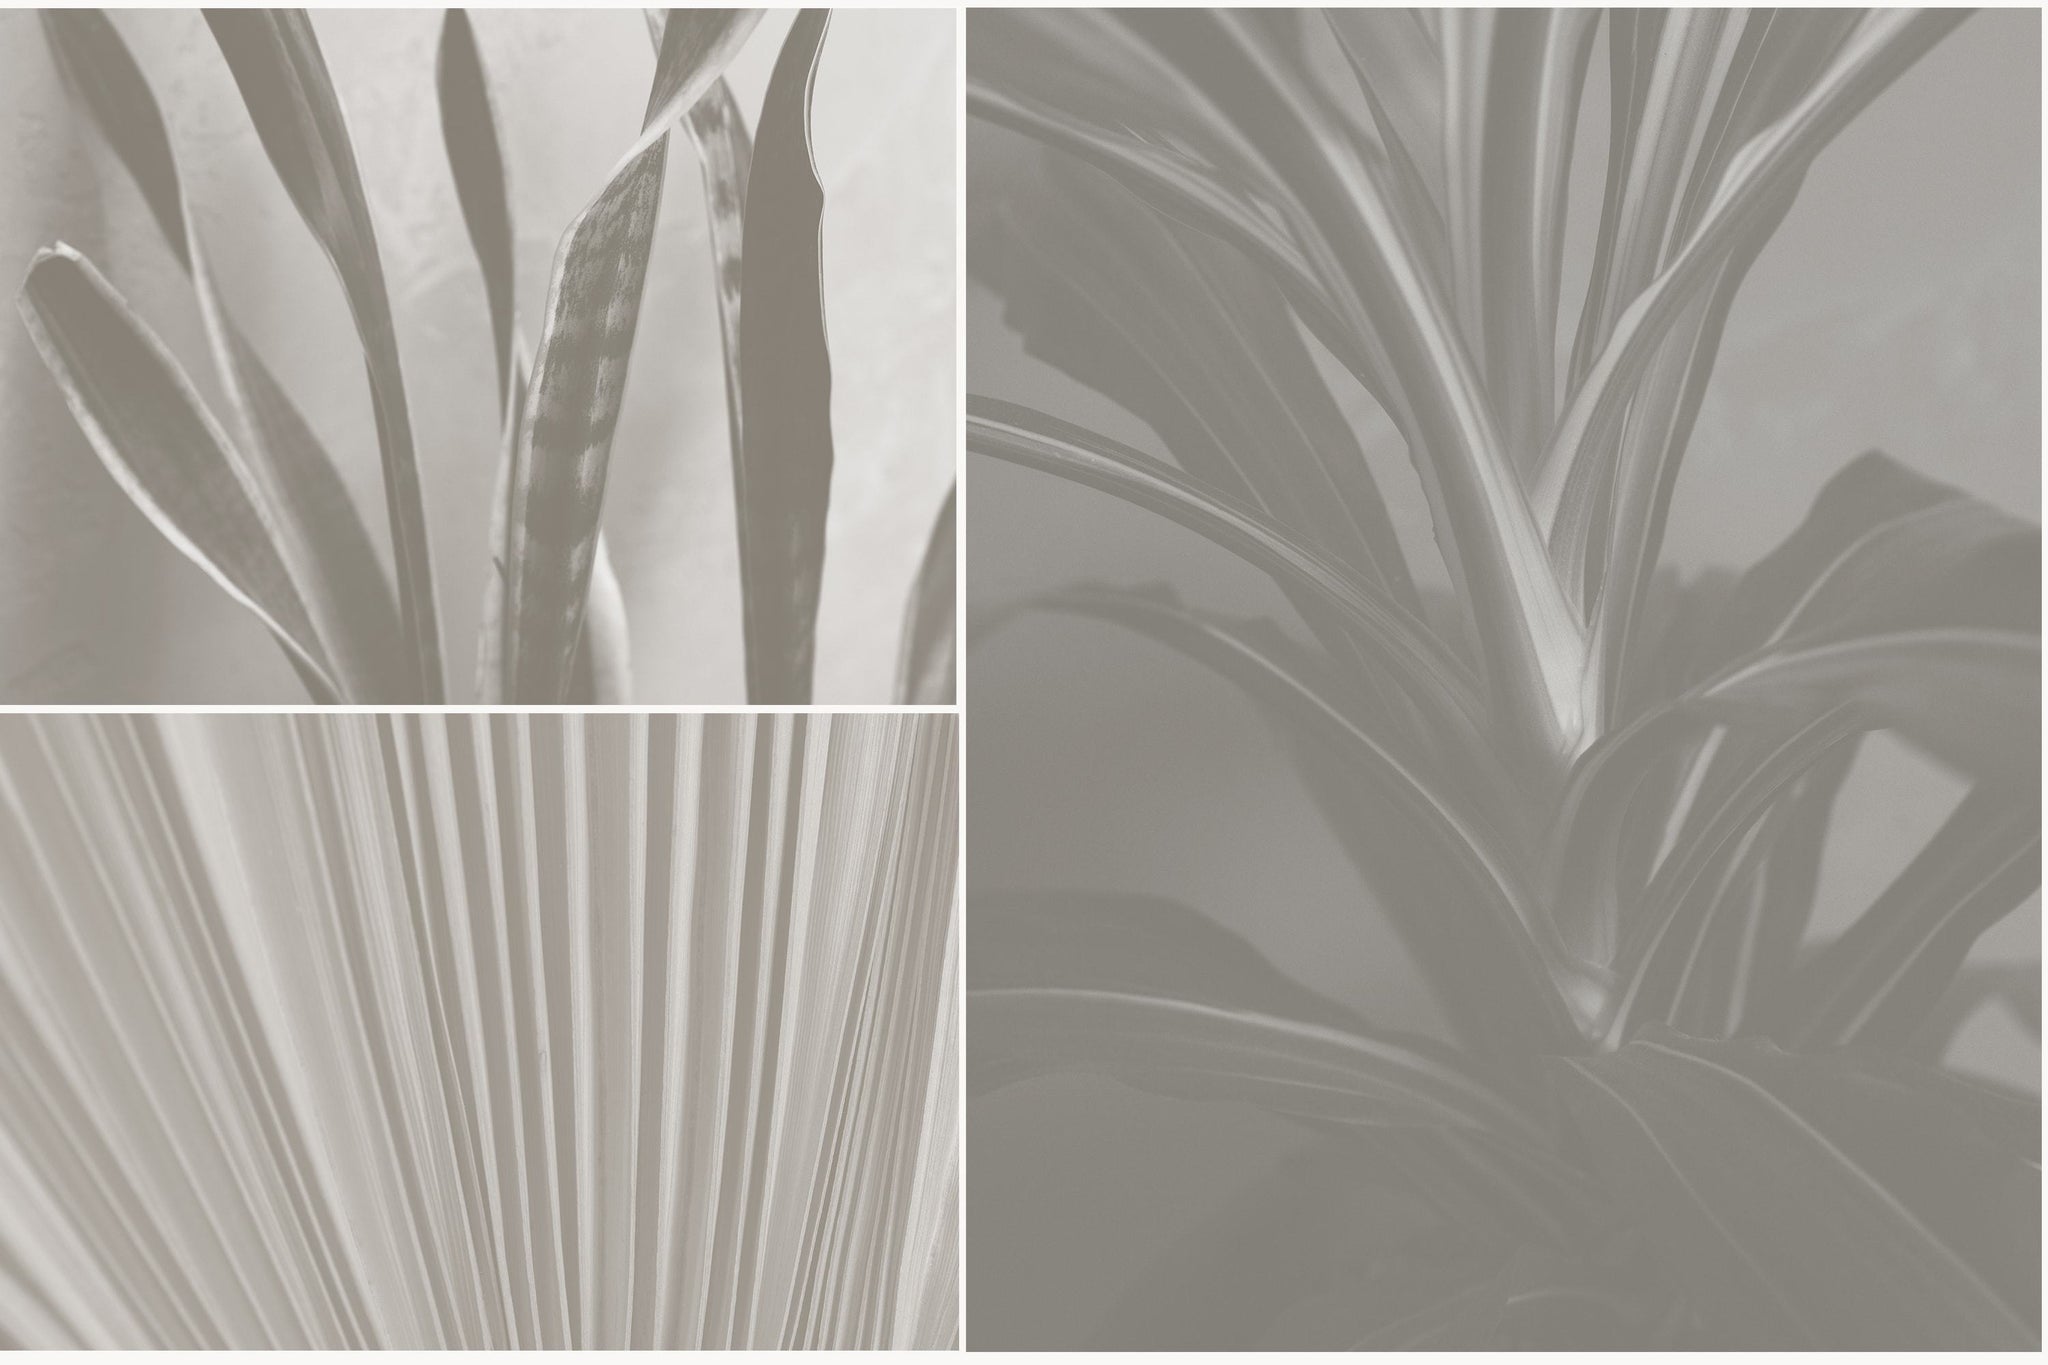 Tropics - Botanical Stock Photos - Copal Studio Packaging Mockups For Designers